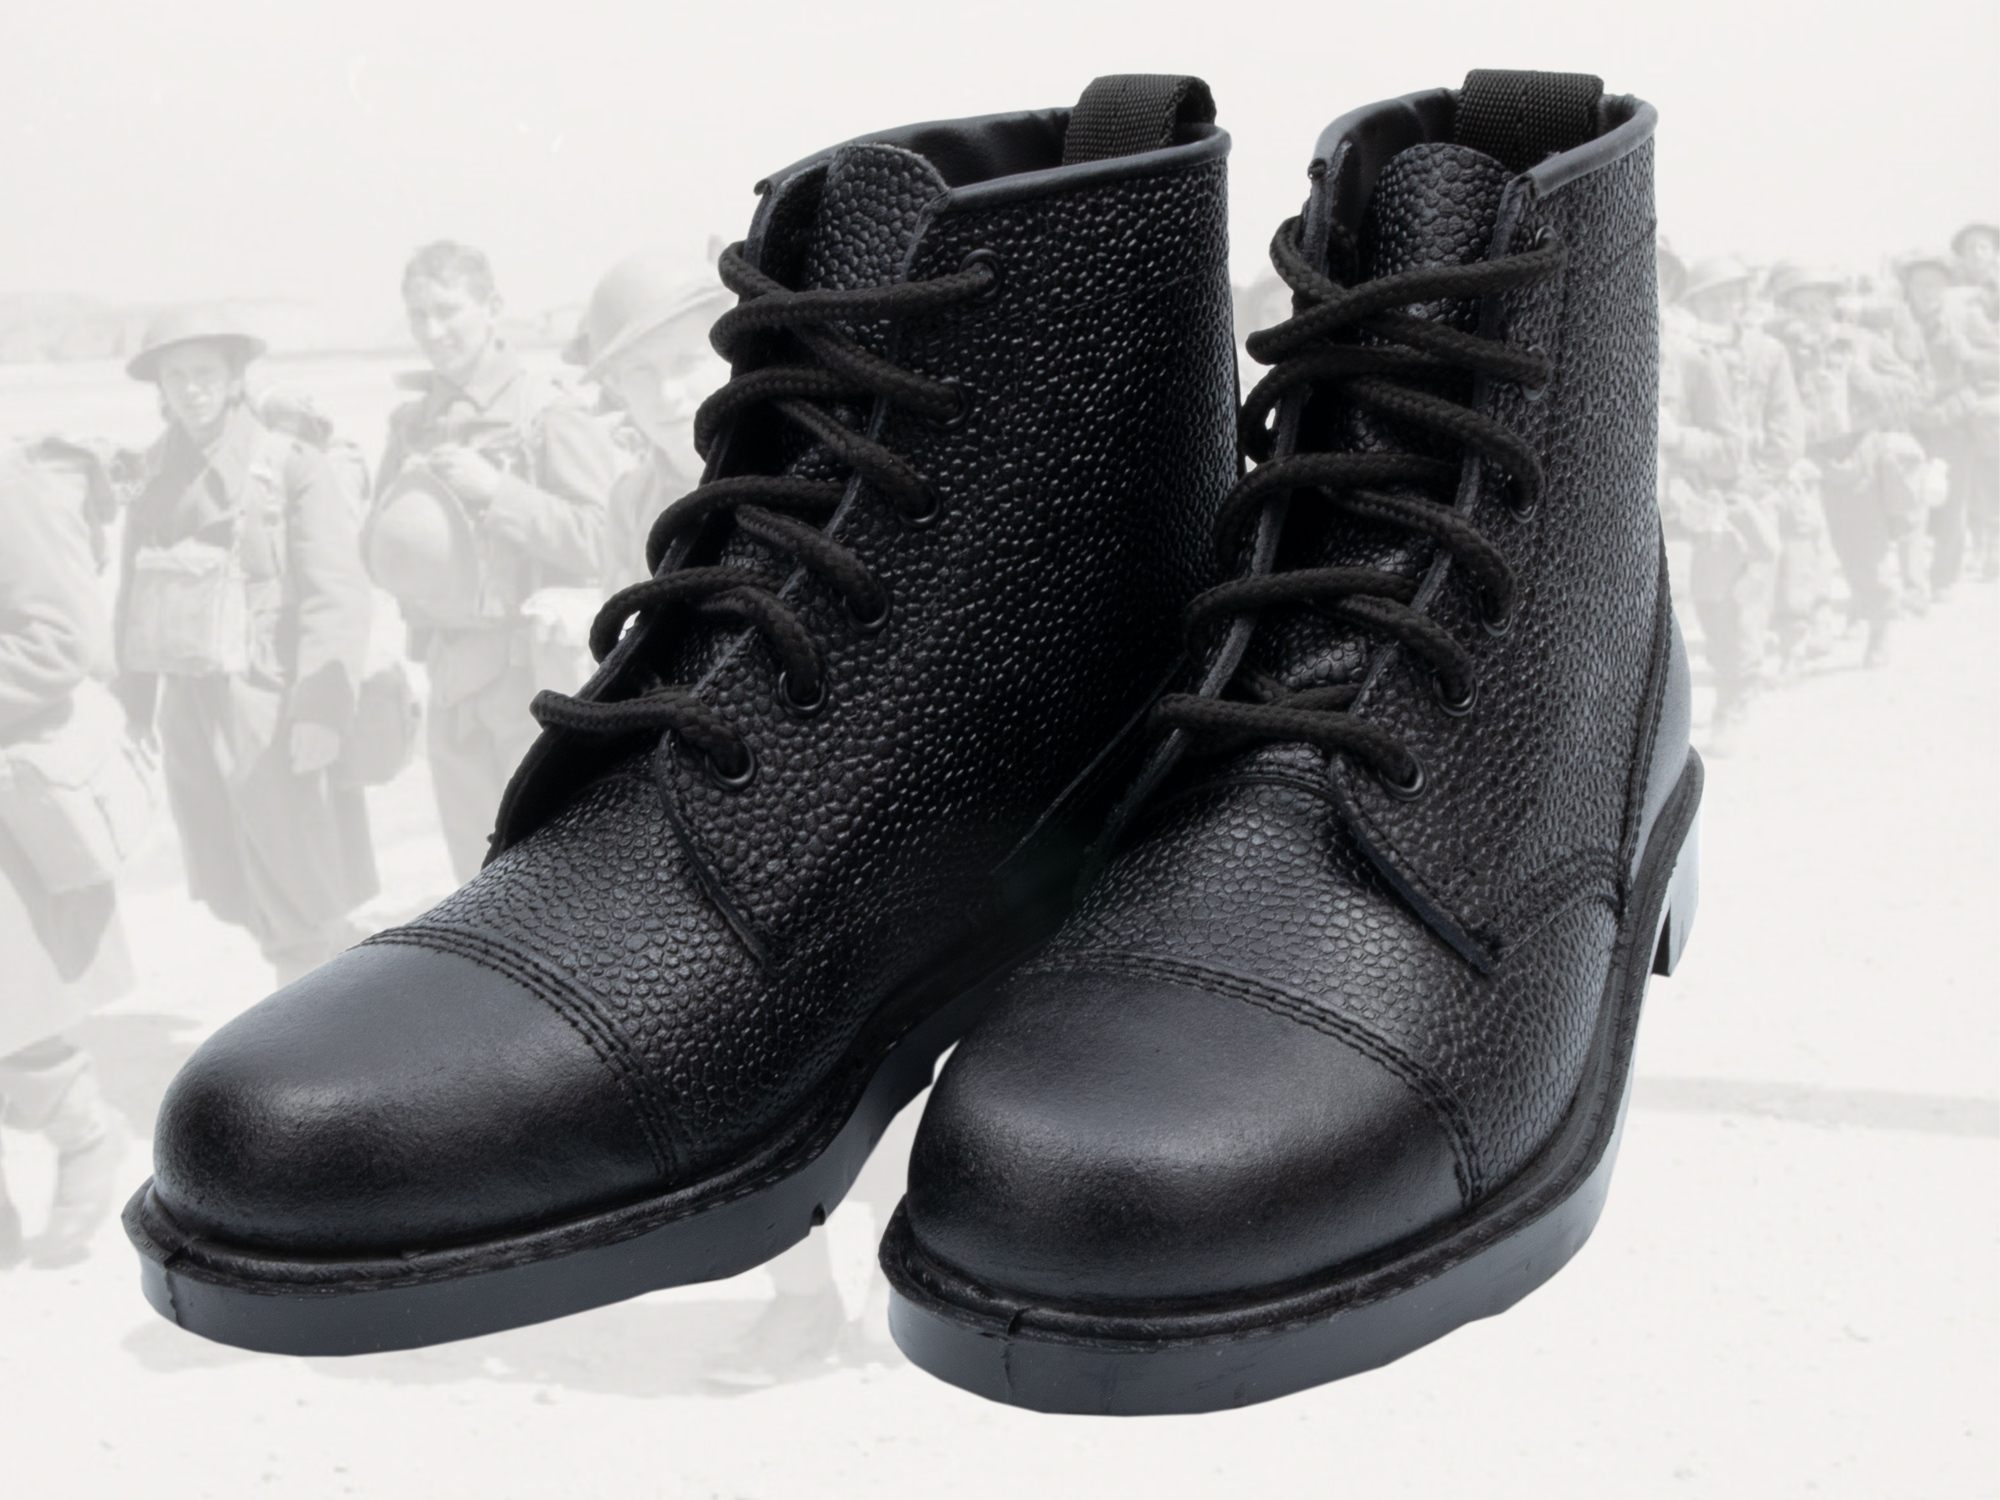 skære ned Konsekvenser importere Shoes, black leather (ammo boot-style) - Re-enactment Shop